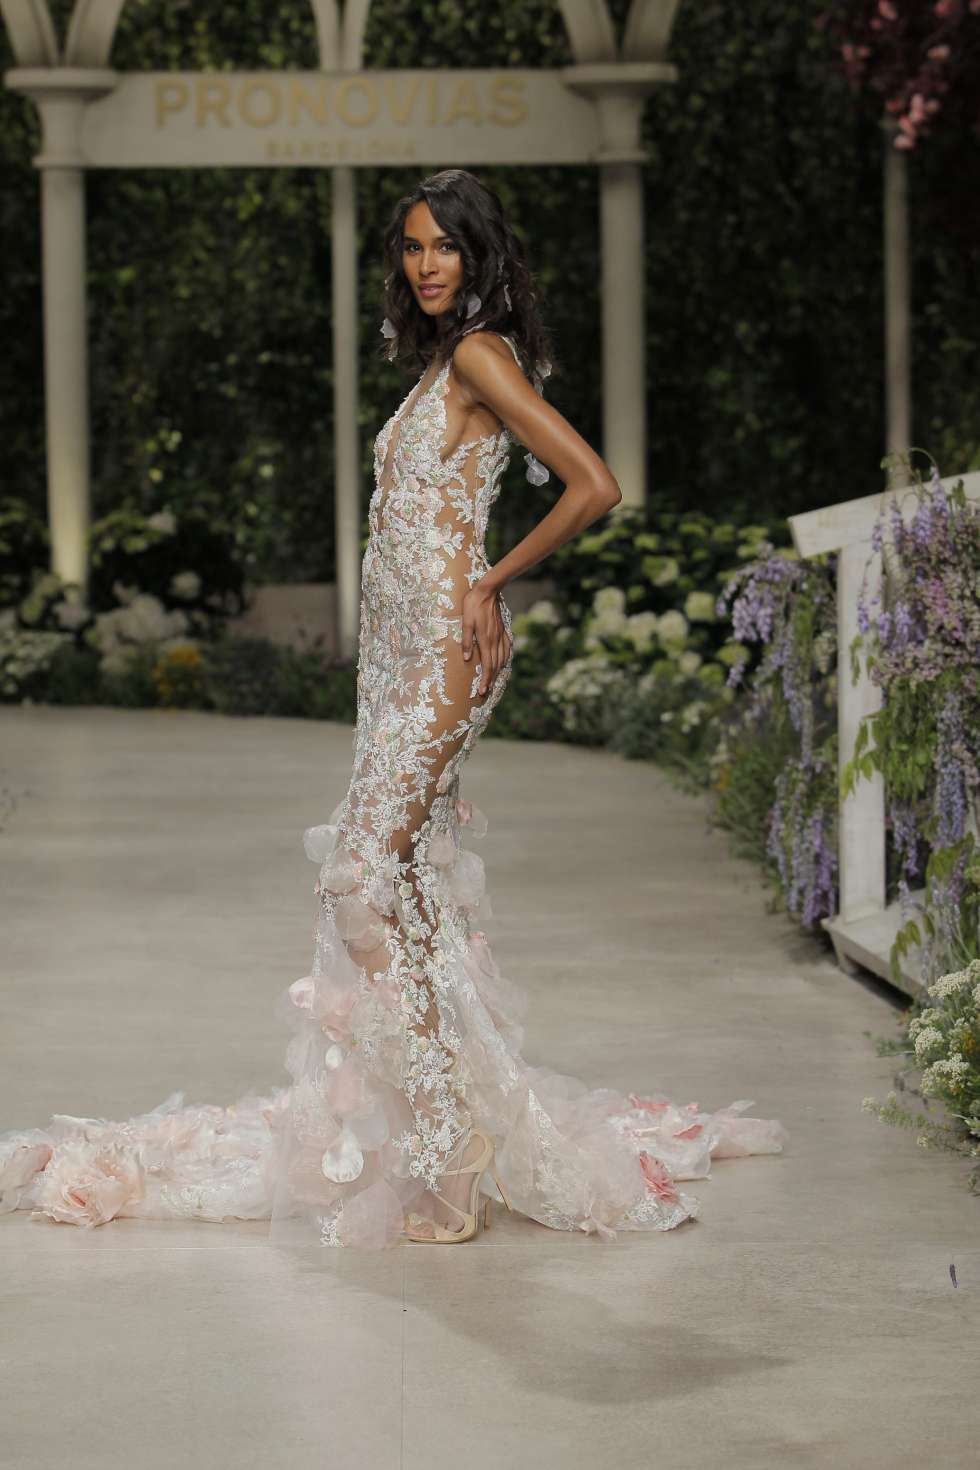 The 2019 Atelier Pronovias Wedding Dress Collection